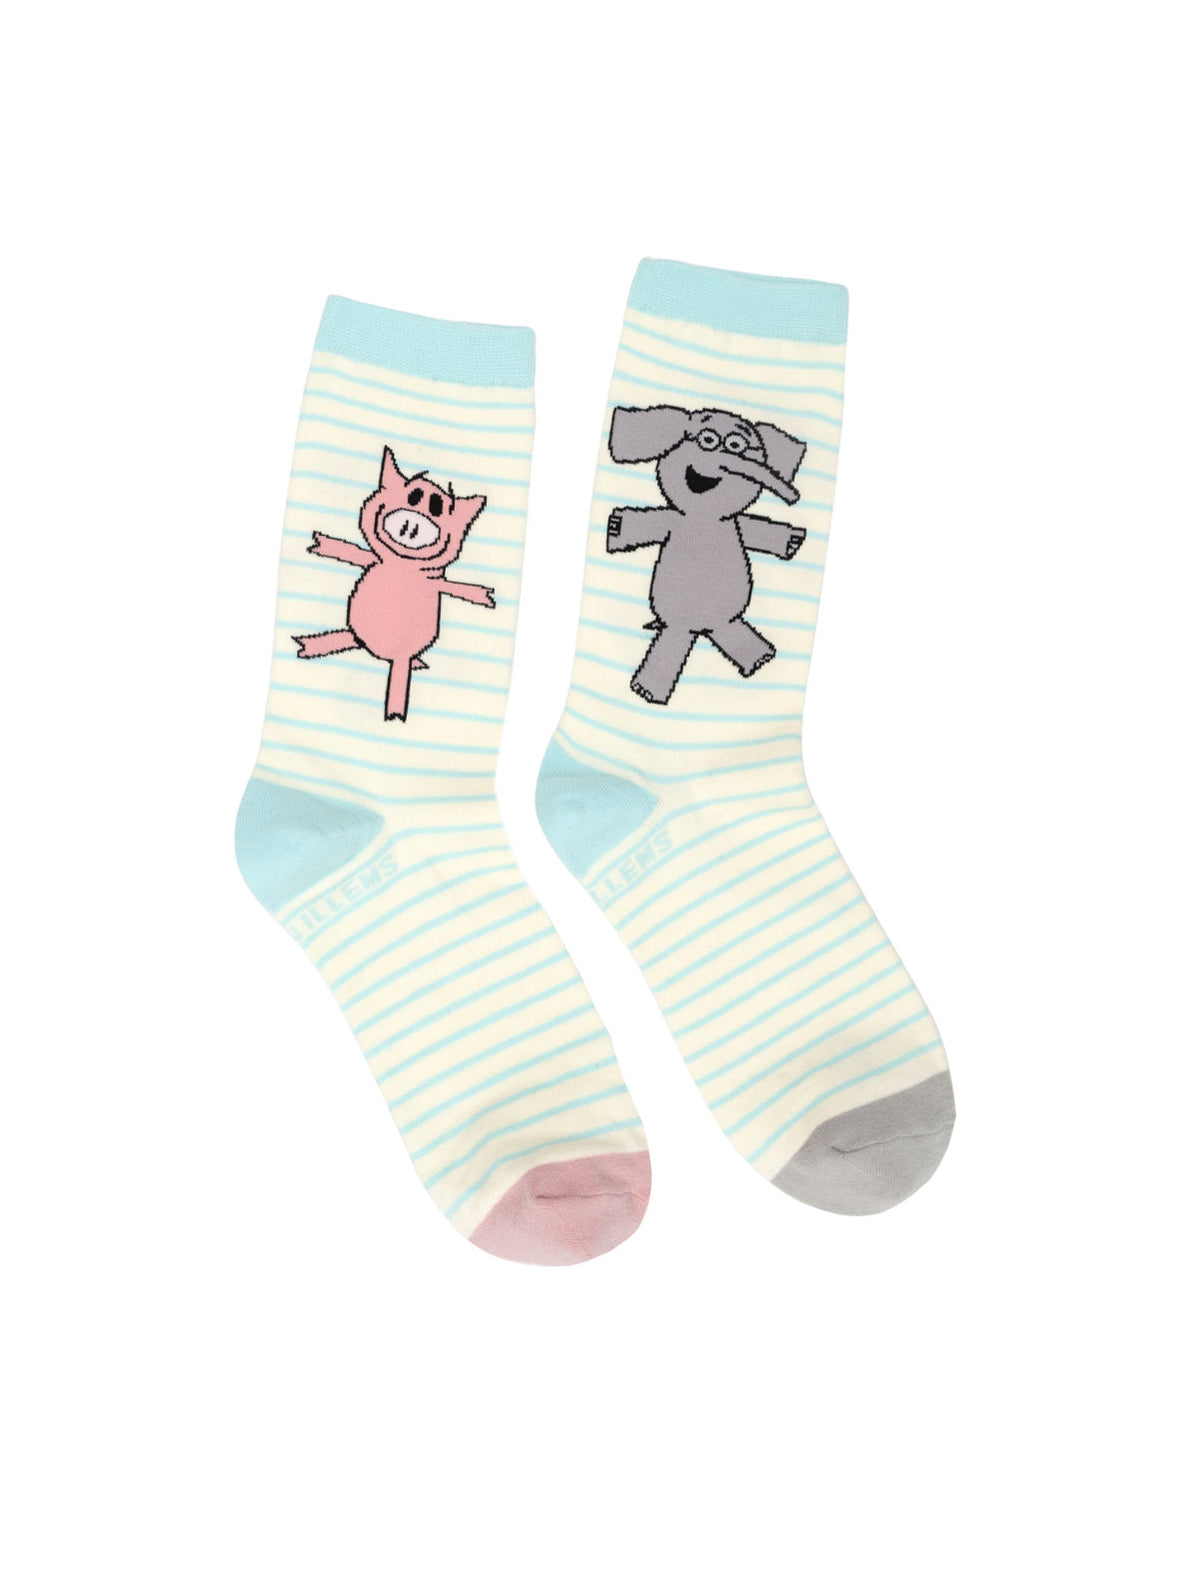 ELEPHANT & PIGGIE socks — Out of Print